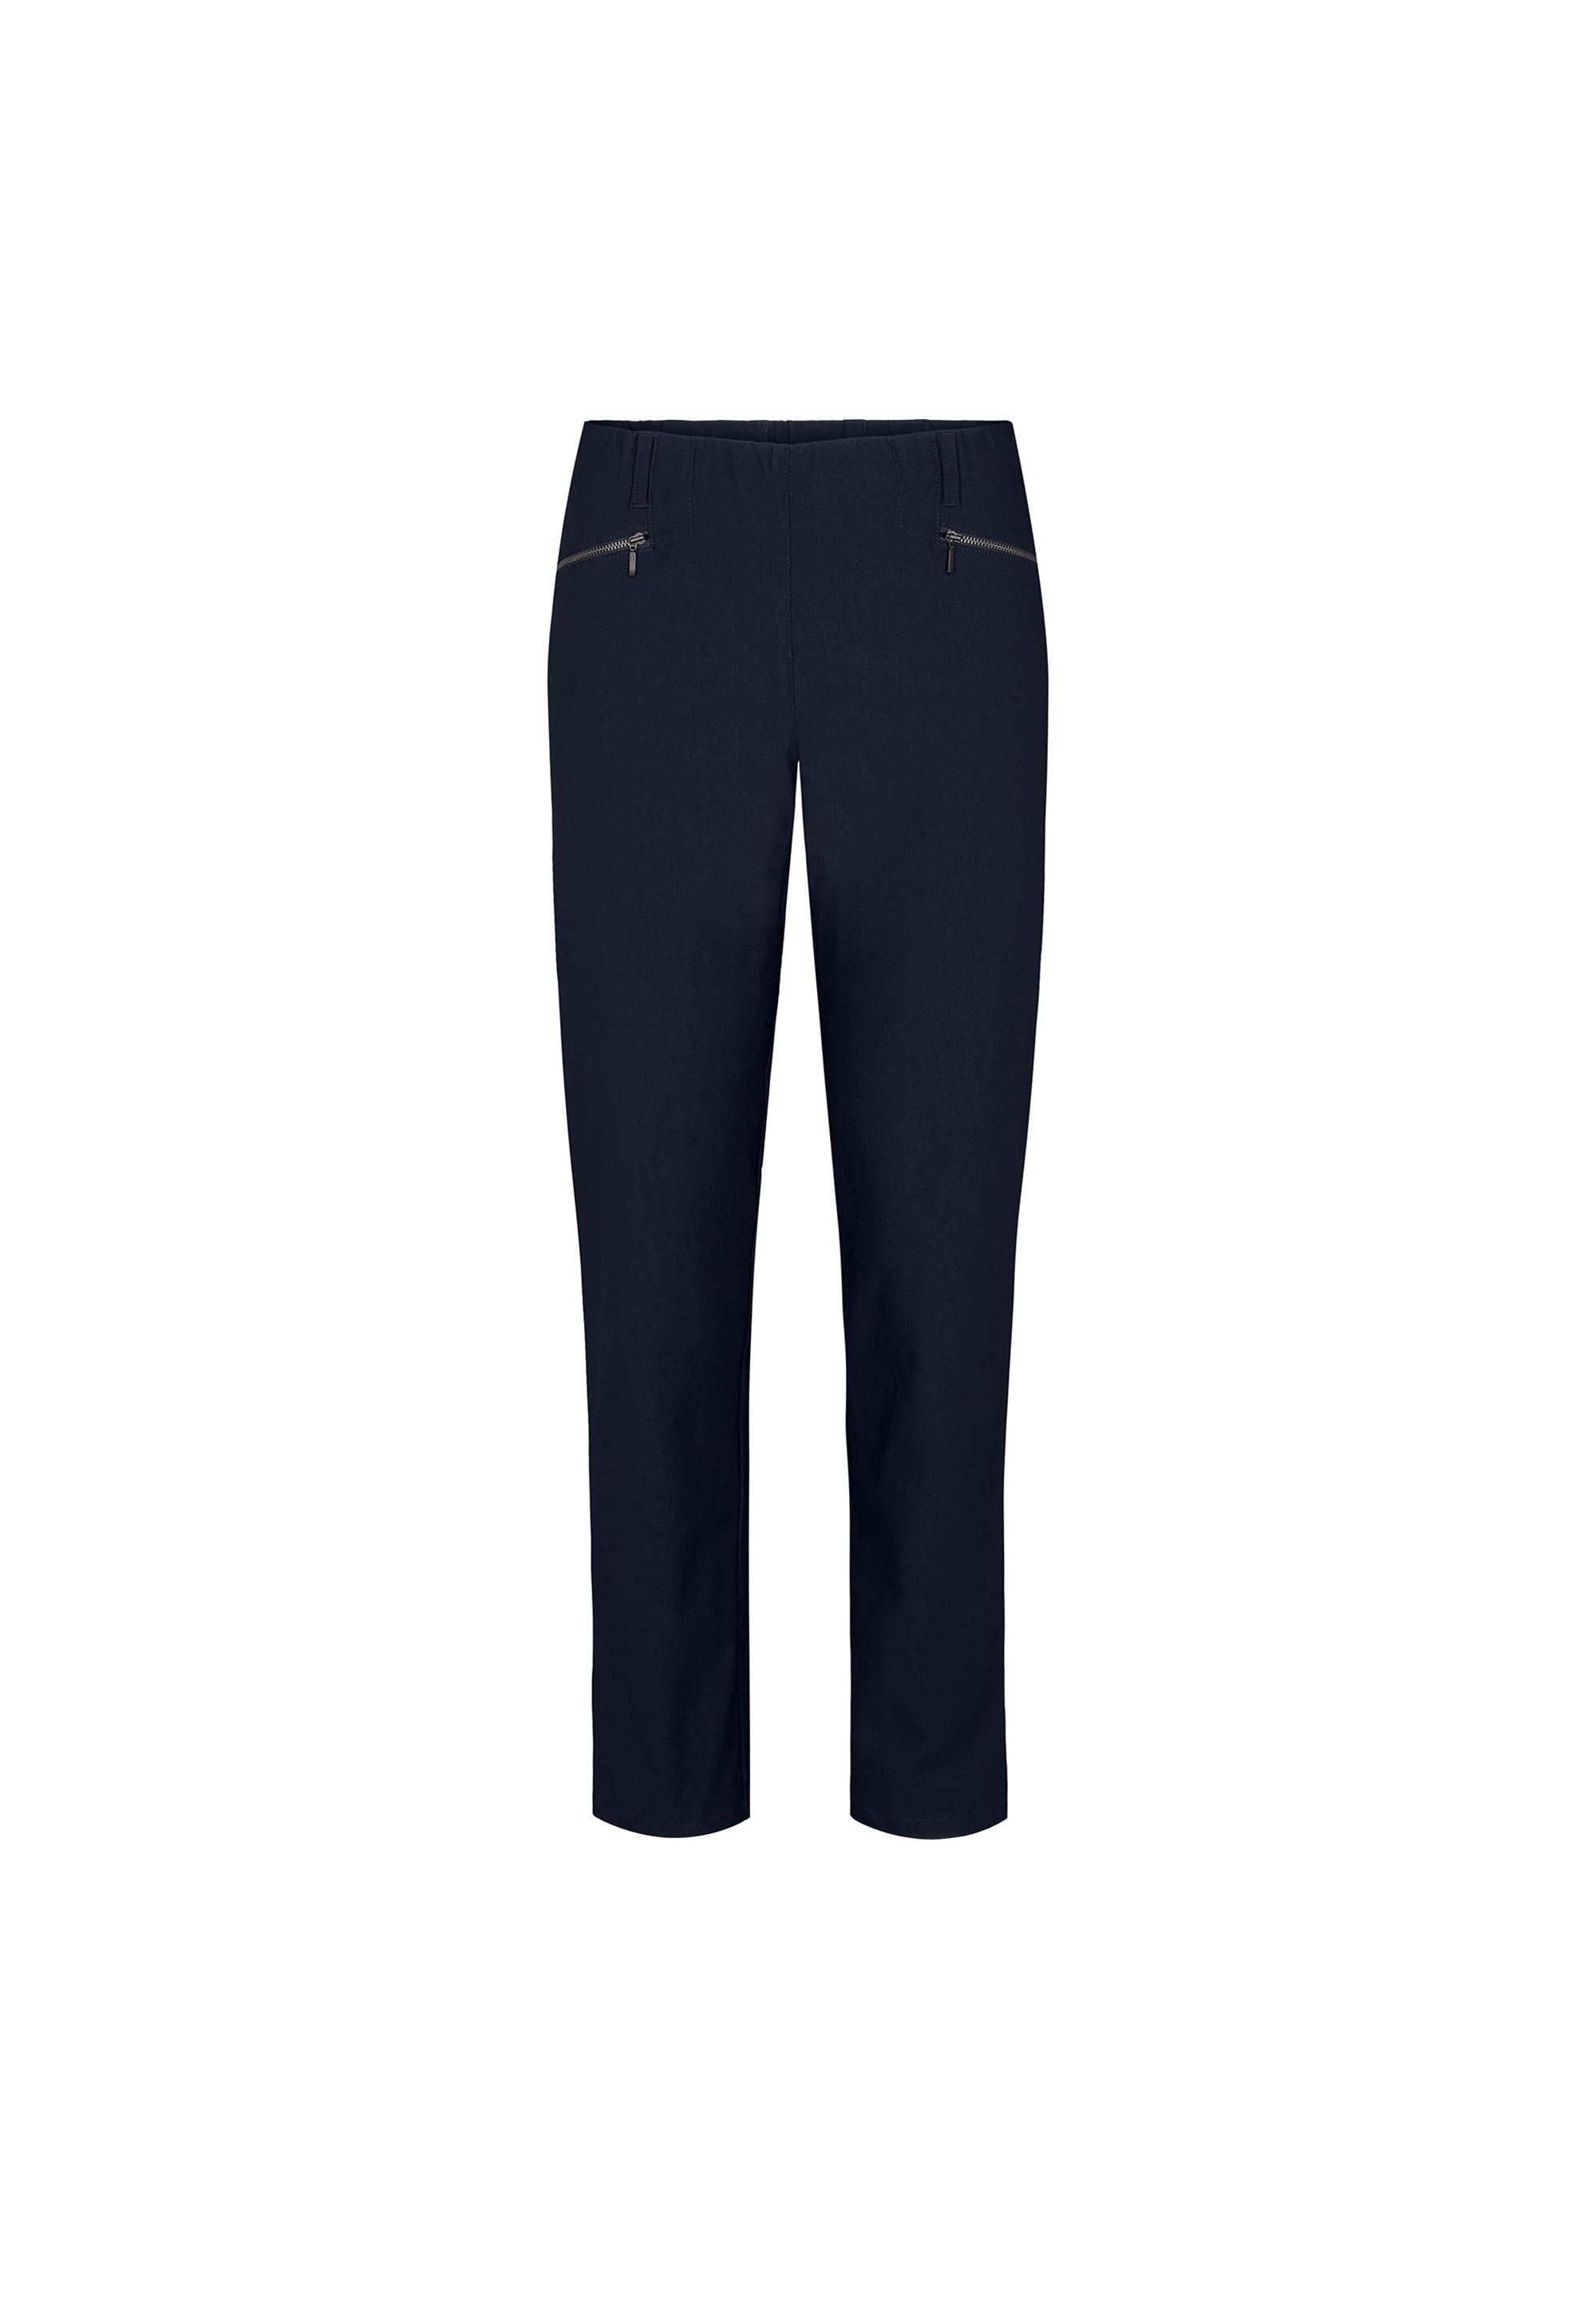 LAURIE Rylie Pocket Regular - Medium Length Trousers REGULAR 99971 Black Brushed